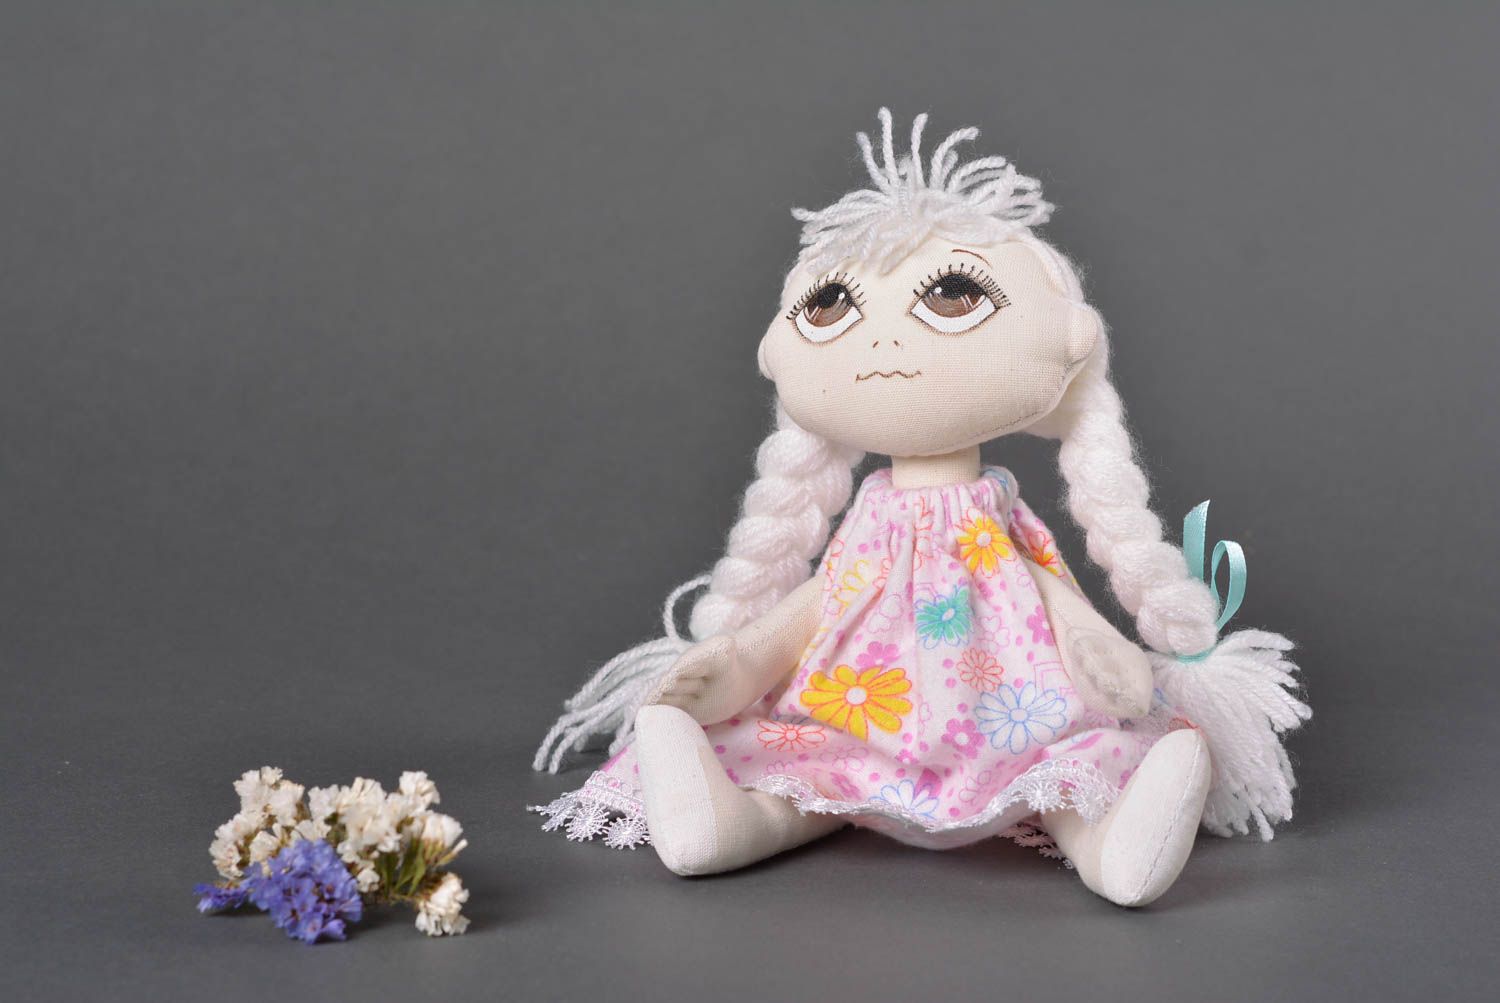 Handmade doll for girls unusual toy designer doll gift ideas nursery decor photo 1